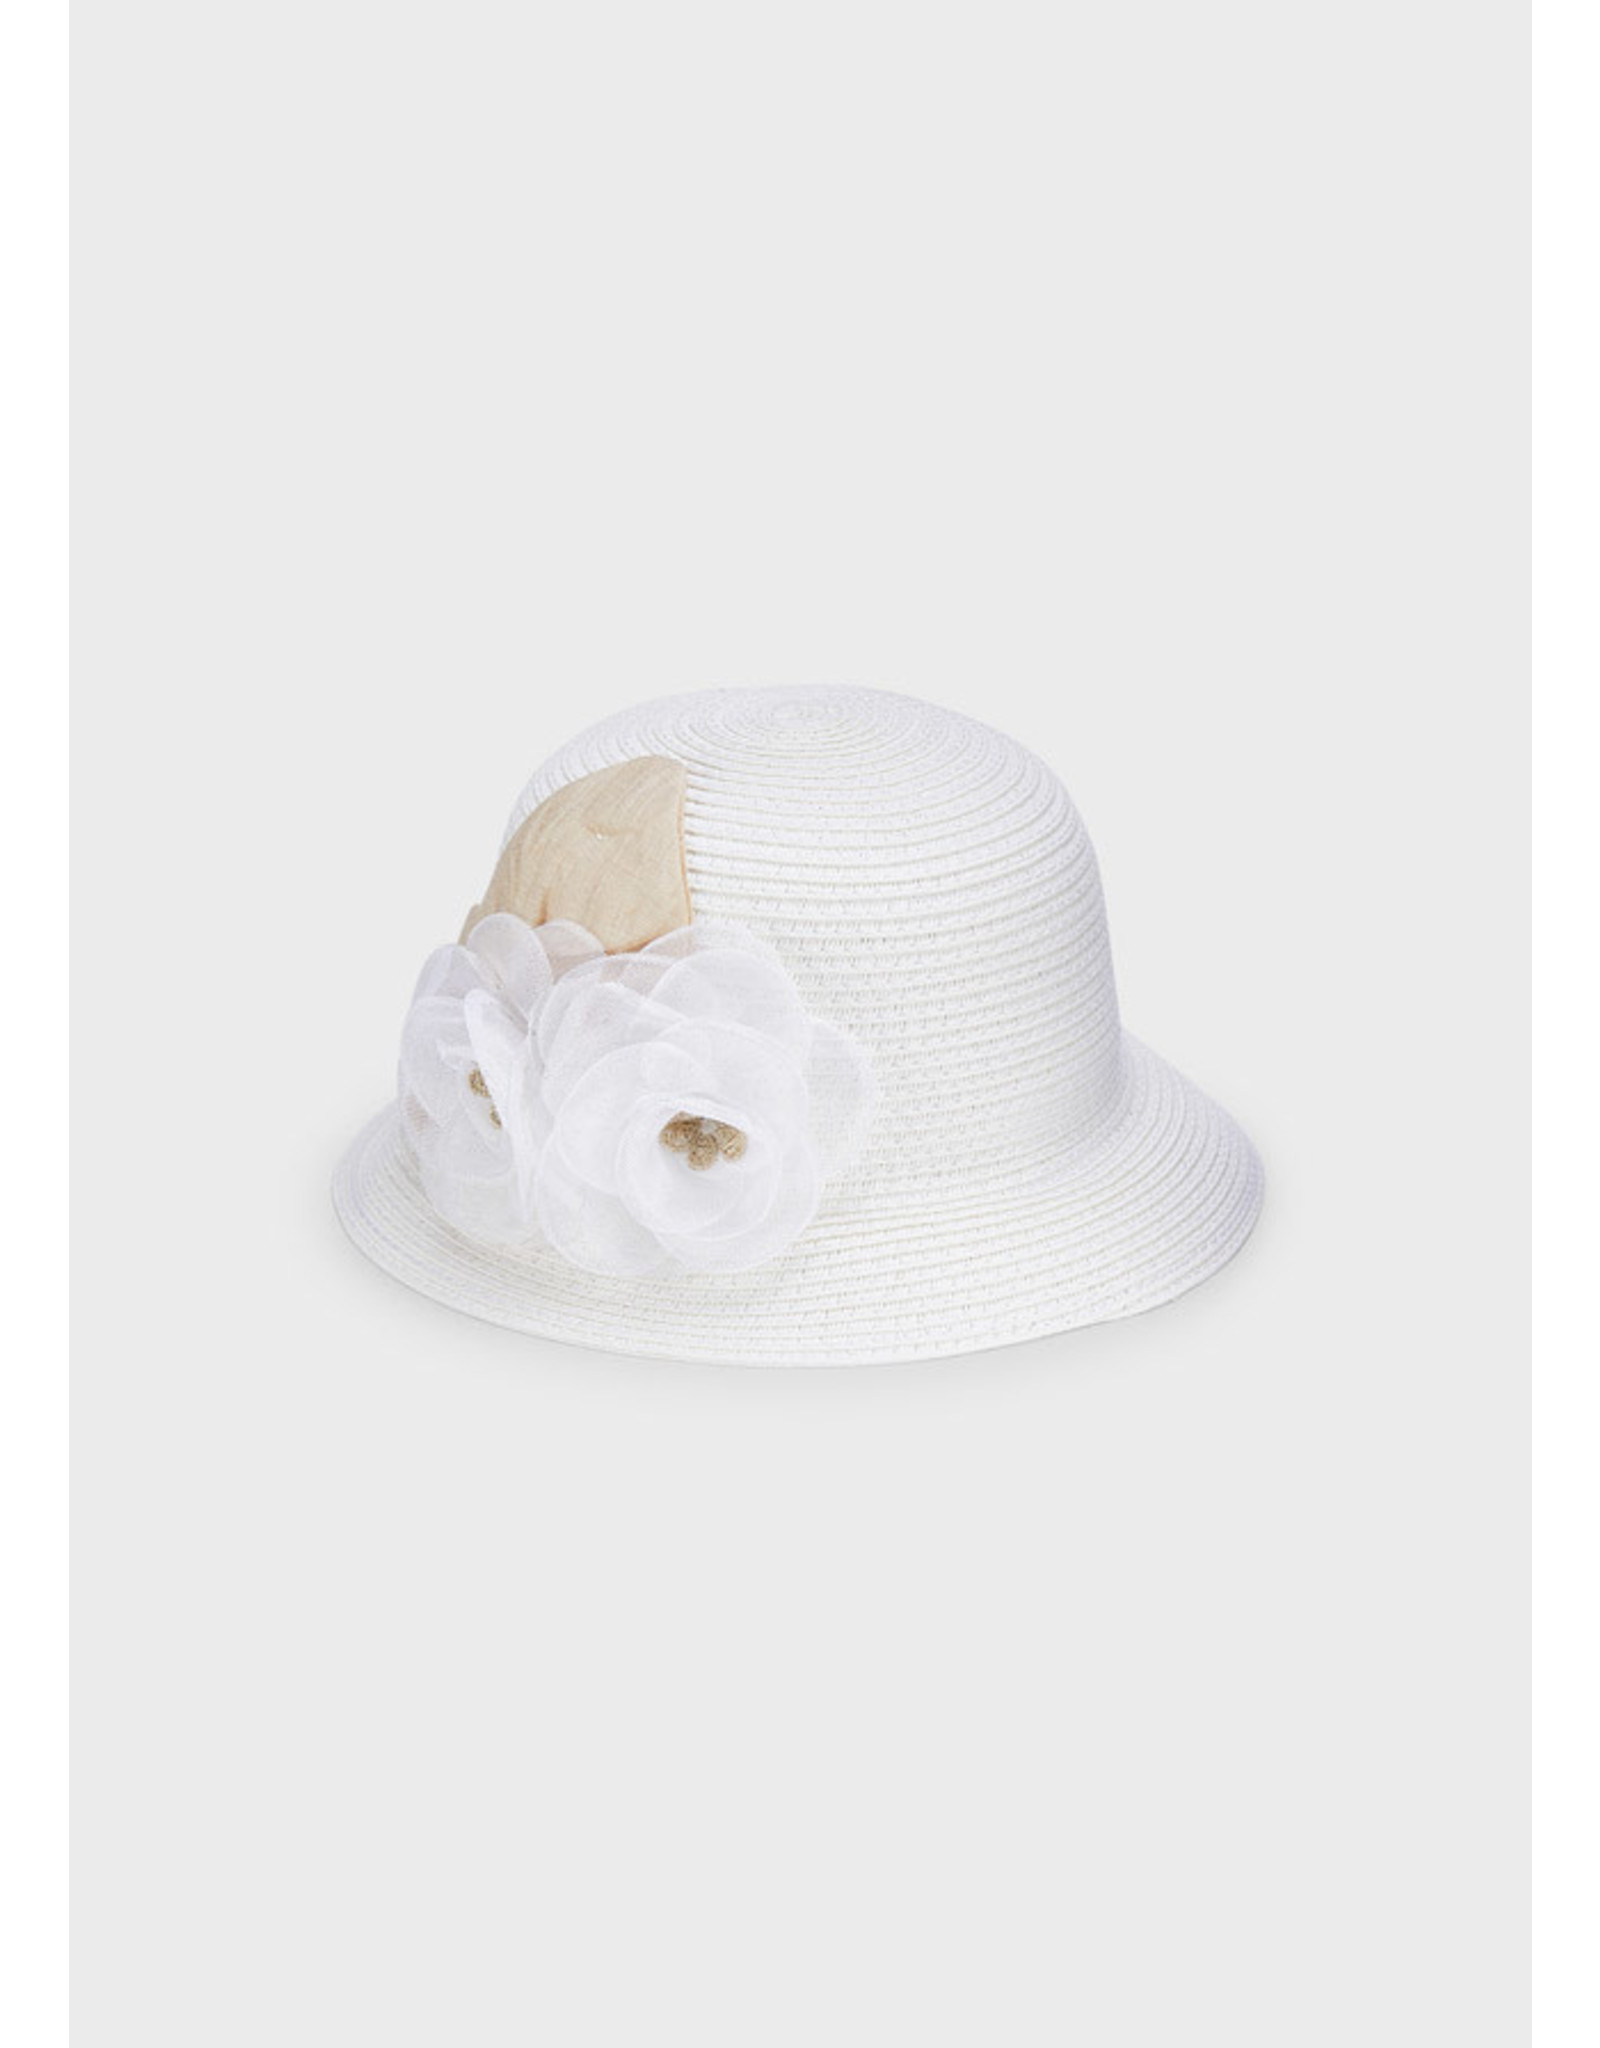 Mayoral White Floral Hat